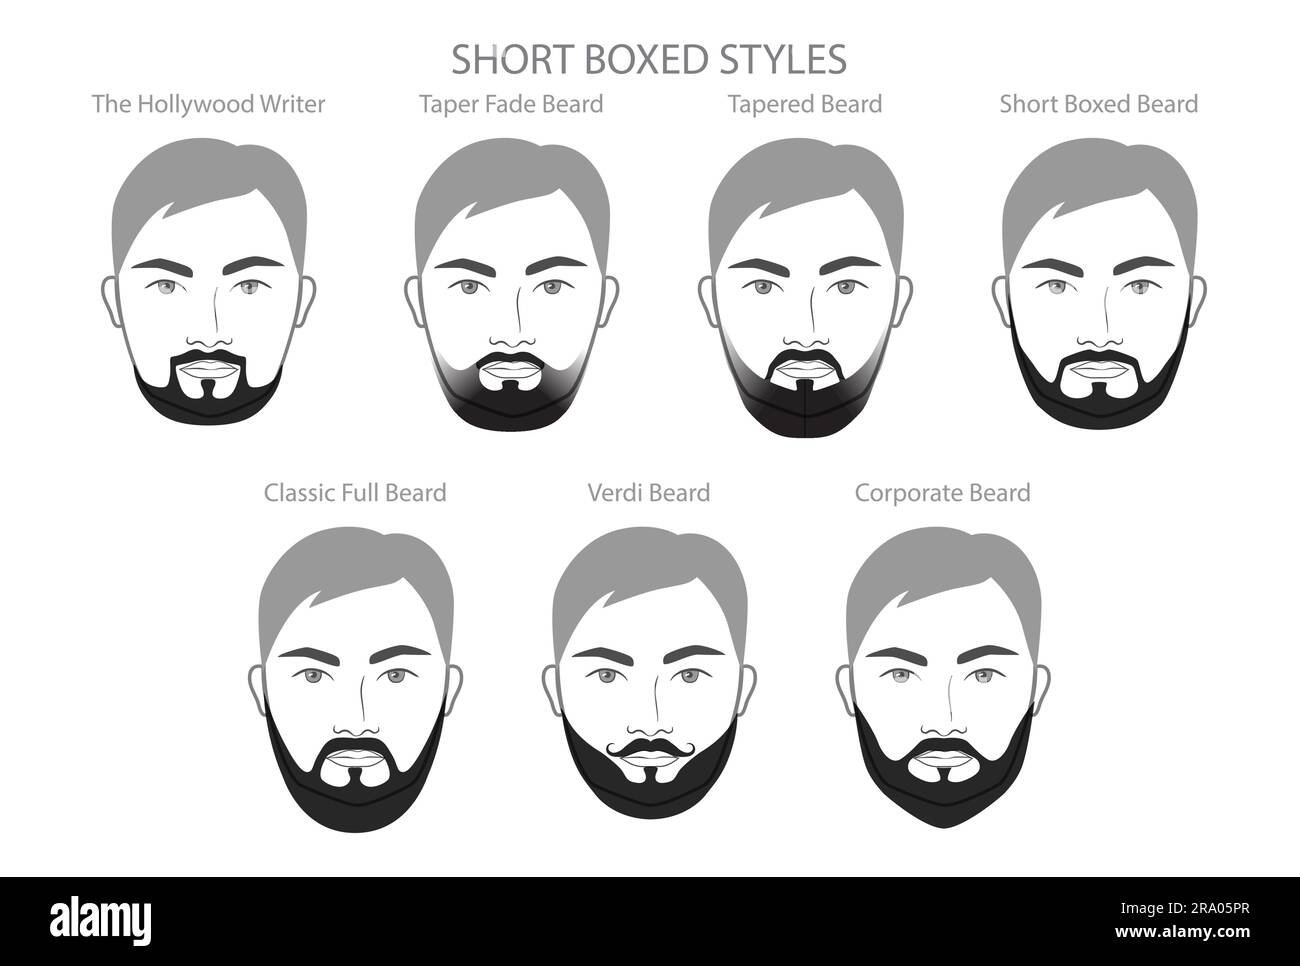 barba corta - Buscar con Google  Beard styles short, Short beard